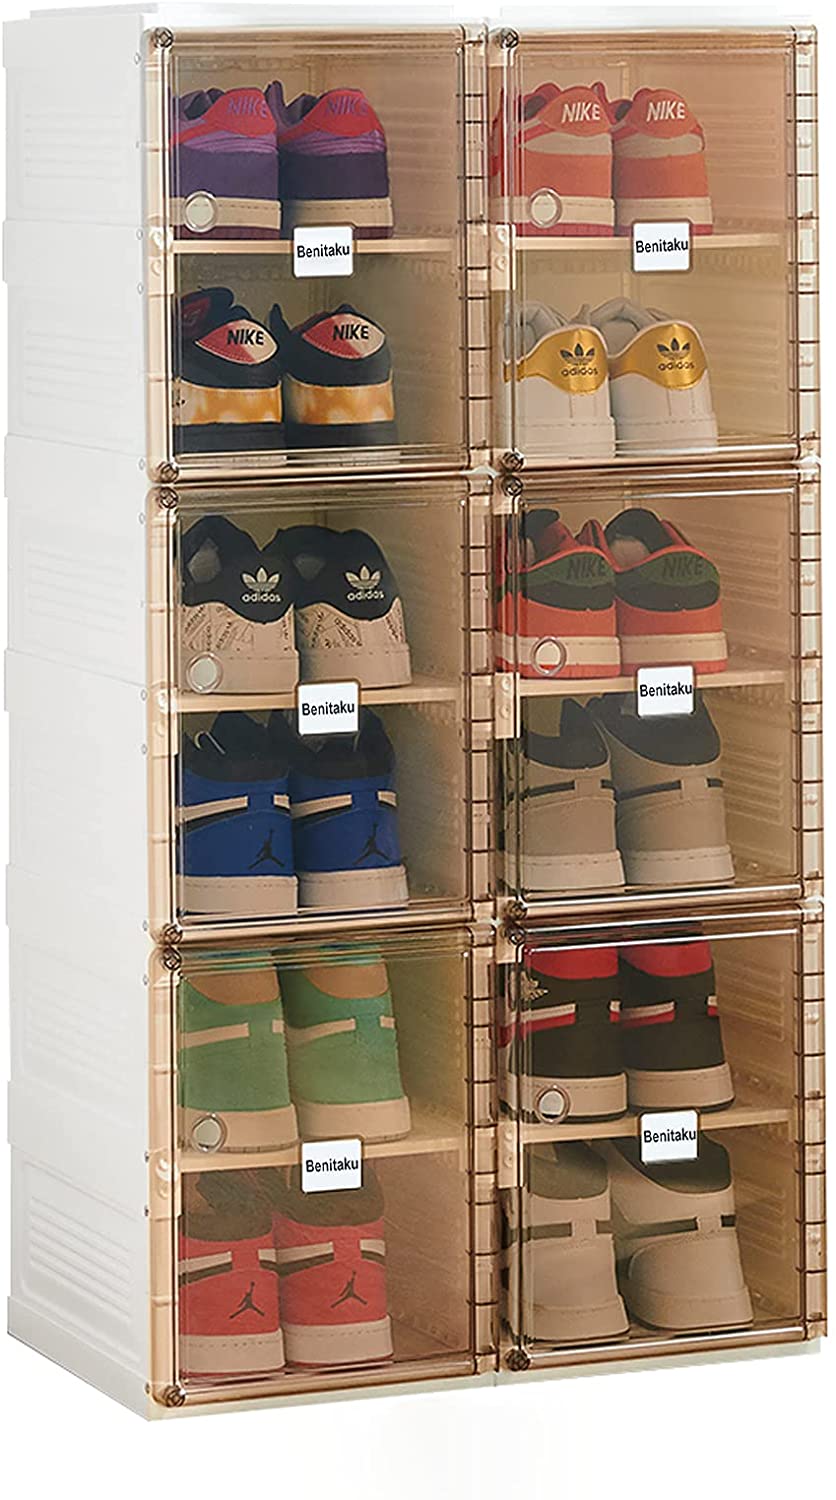 Benitak shoe storage closet